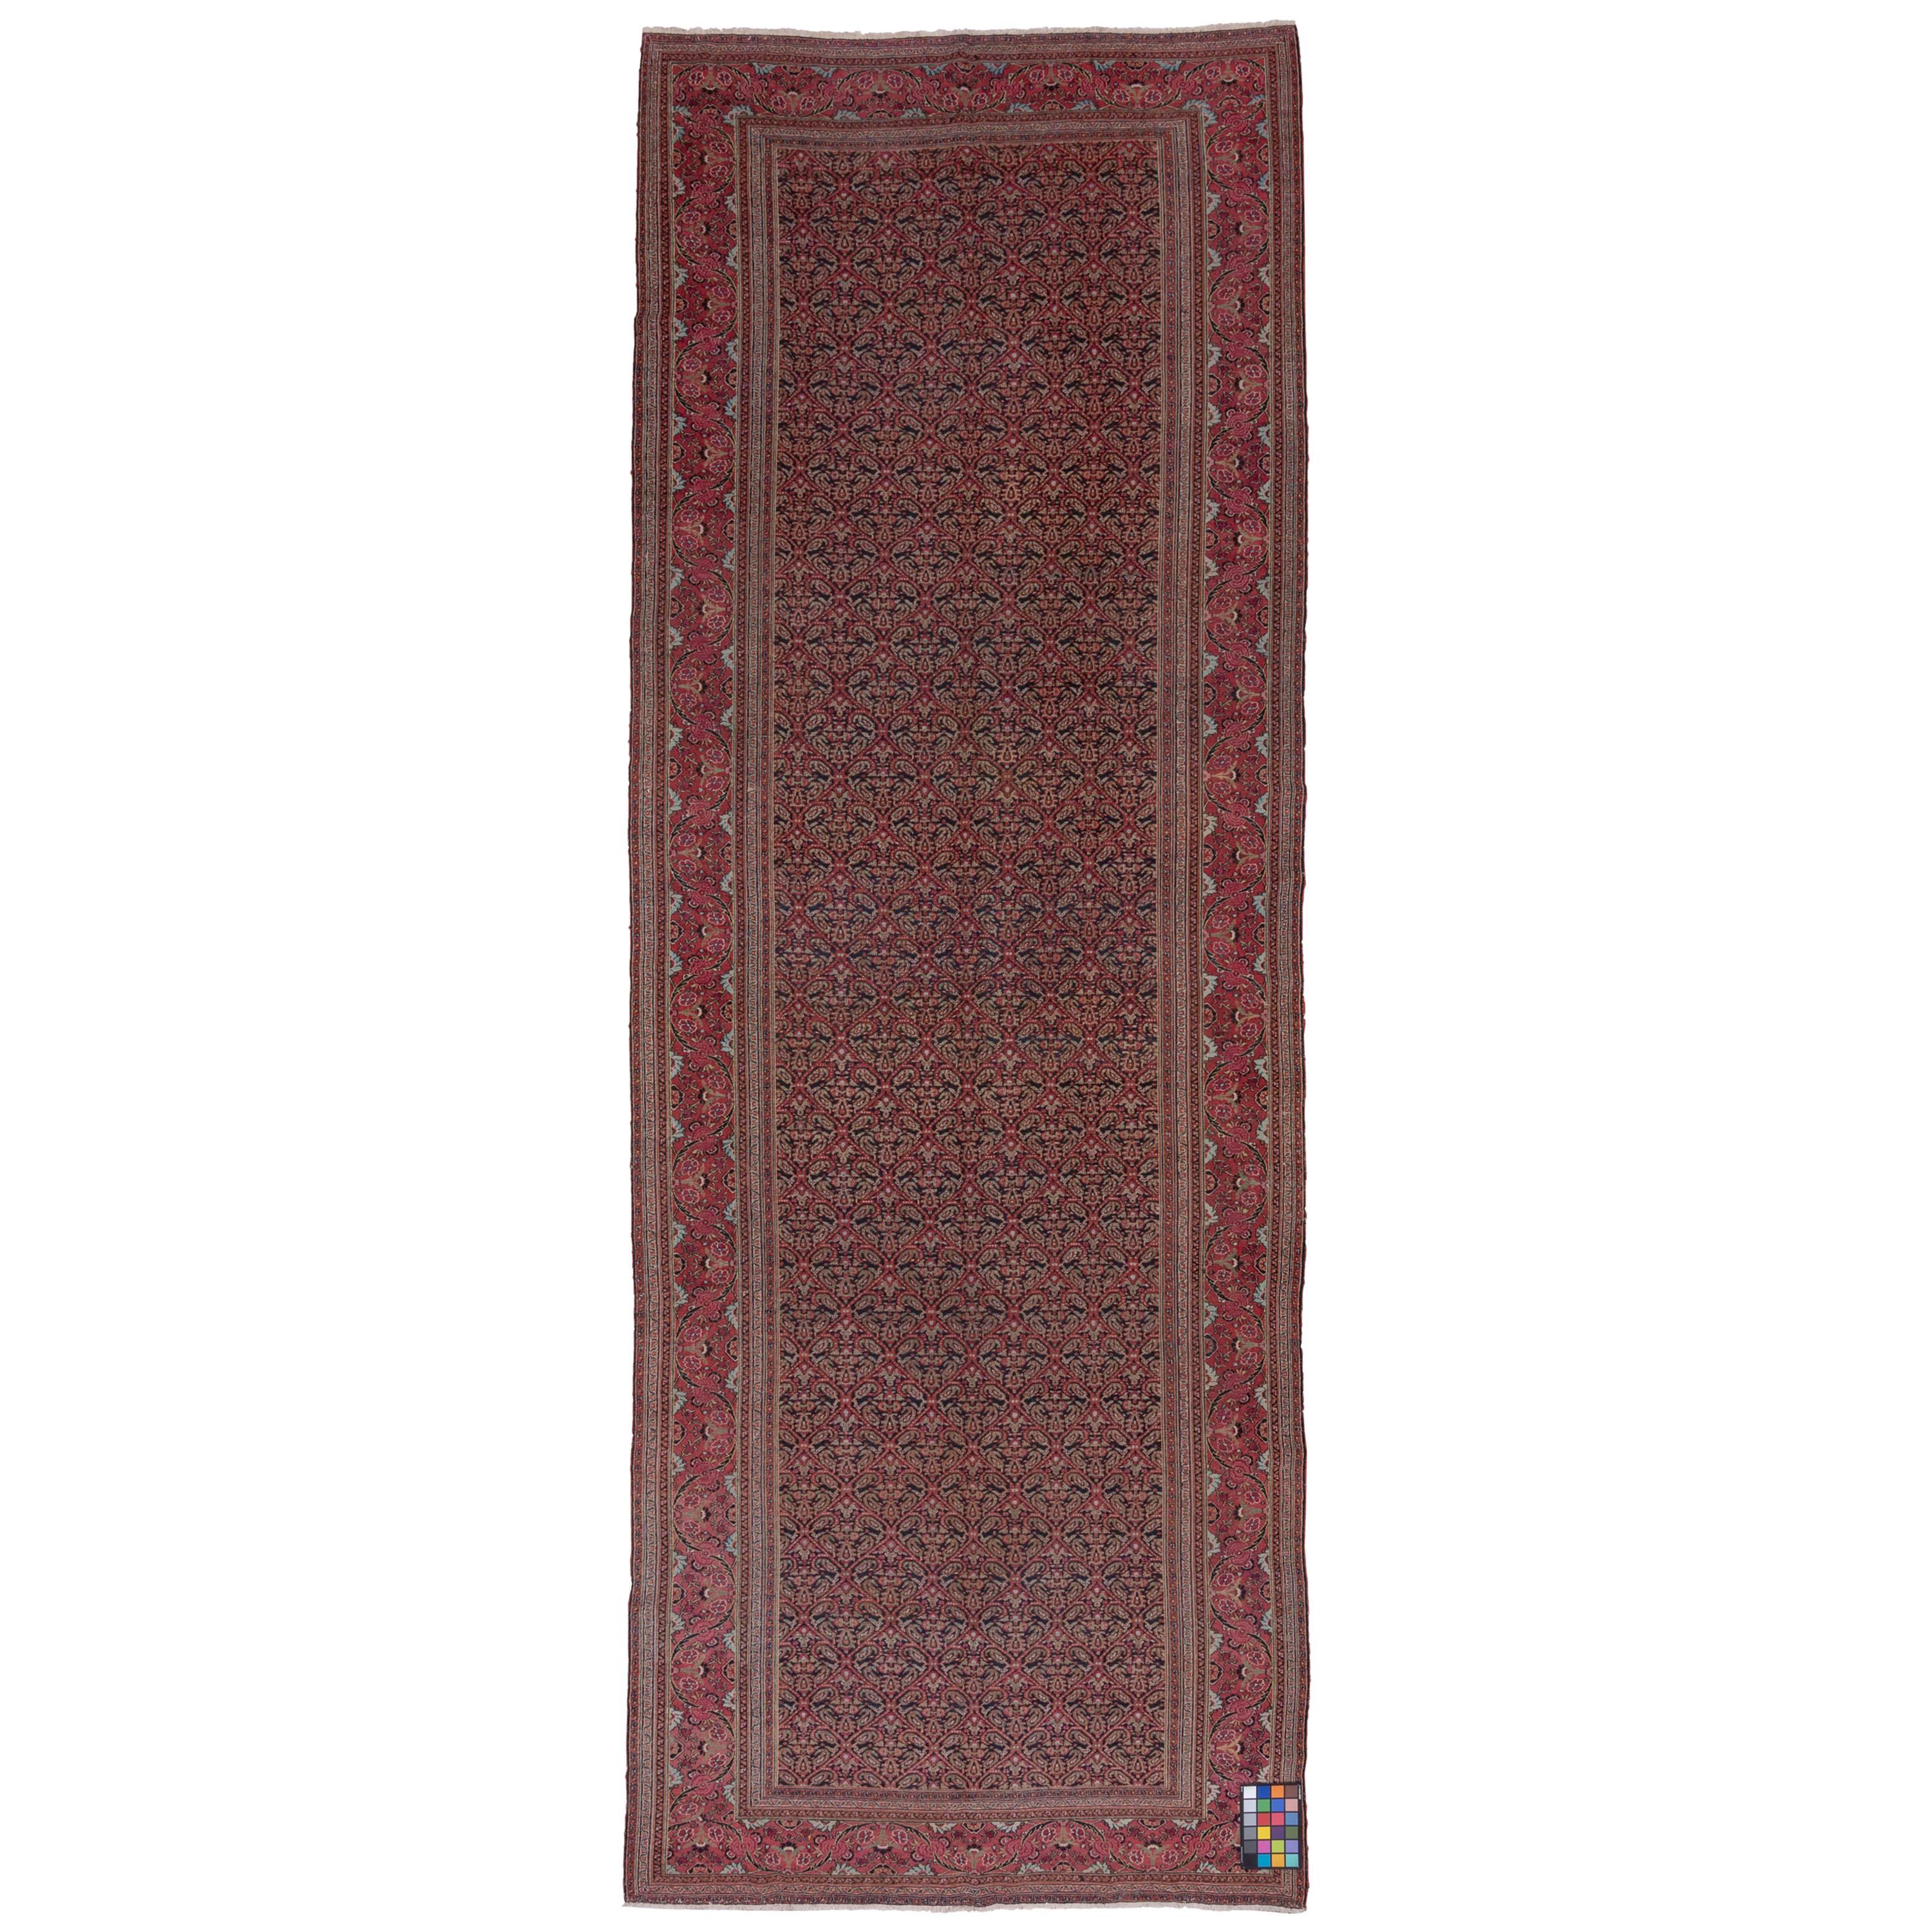 Persischer antiker Khorassan-Teppich, rotes Feld